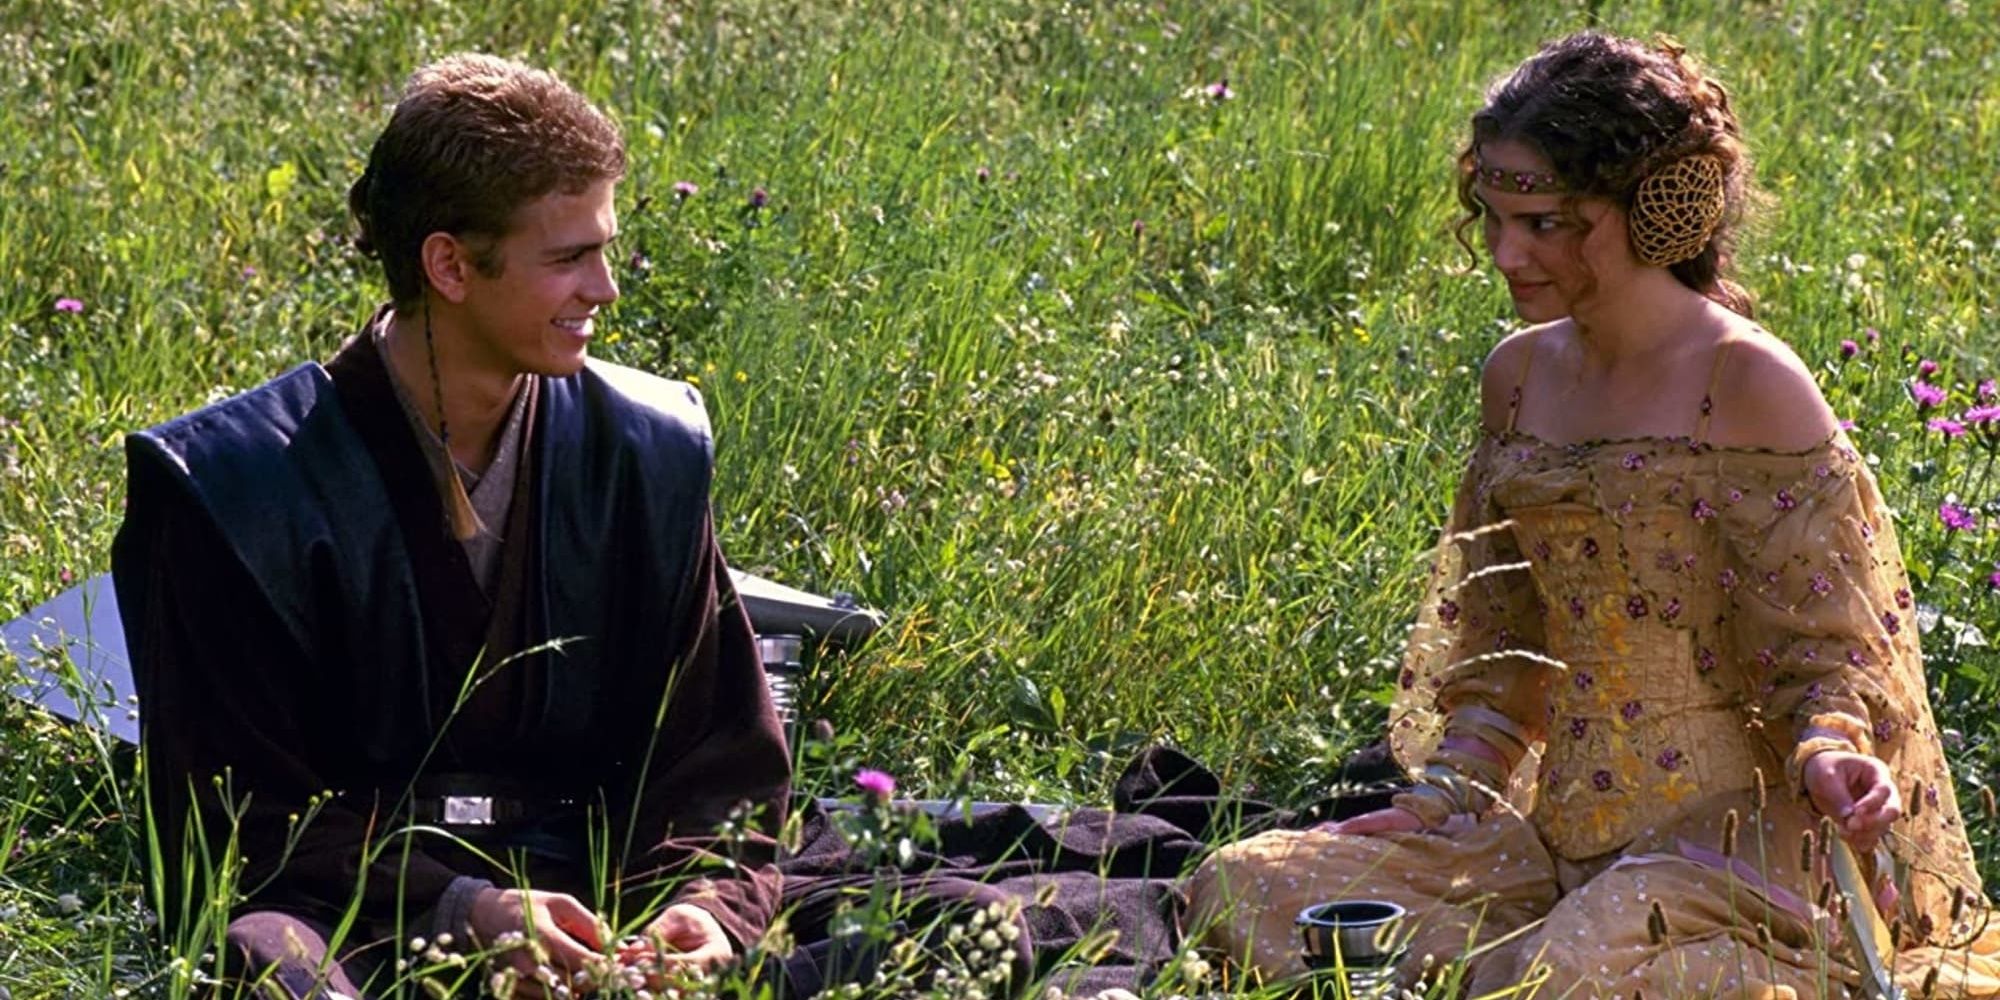 Anakin Skywalk (Hayden Christensen) and Padme Amidala (Natalie Portman) enjoy a picnic in Naboo meadow